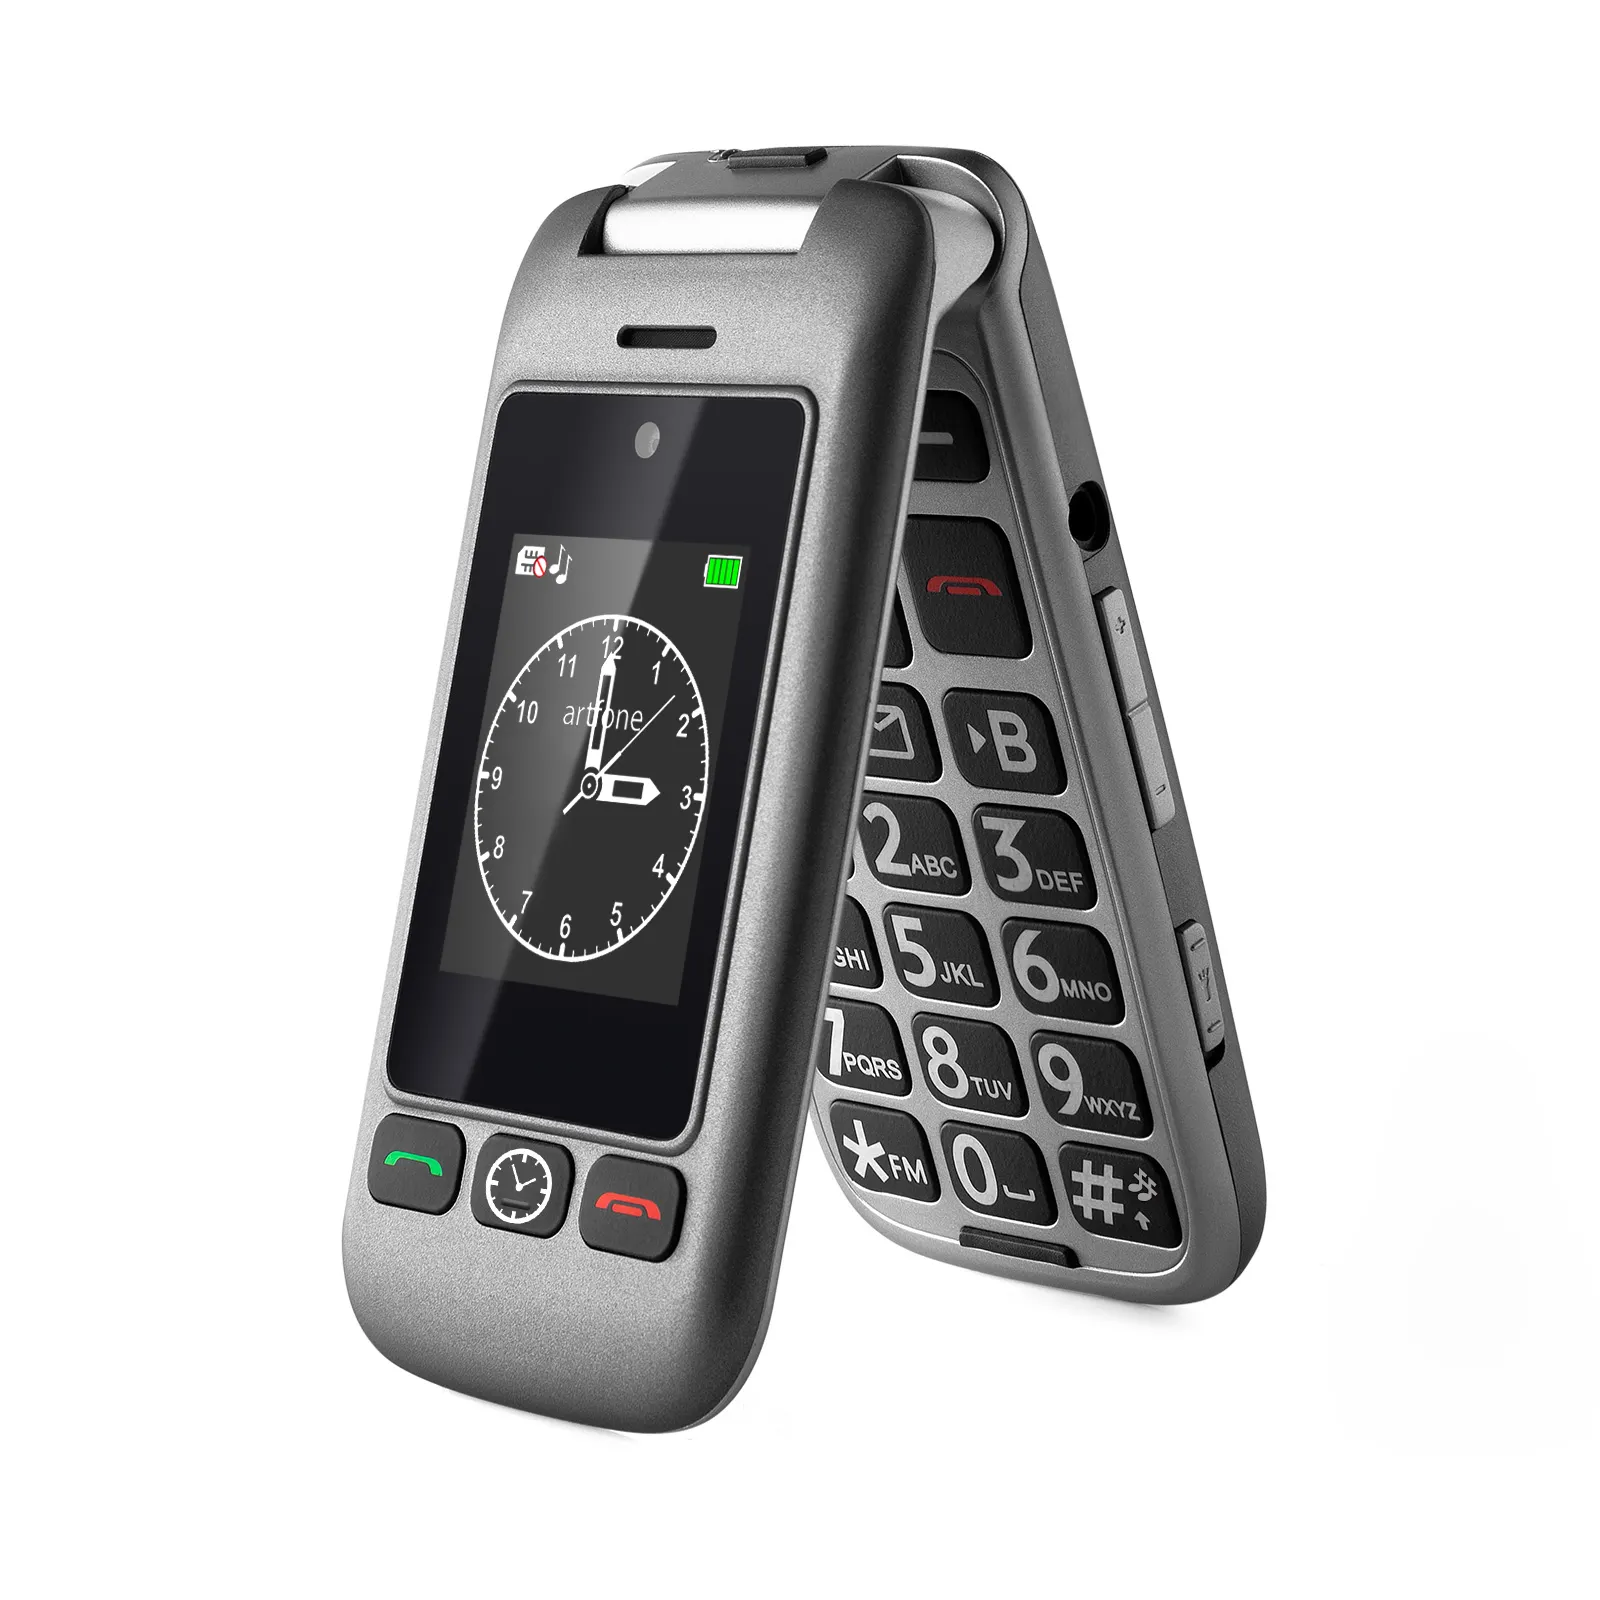 artfone G6 4G โทรศัพท์มือถือพลิกโทรศัพท์มือถือ LCD คู่ผู้สูงอายุลําโพงปุ่มขนาดใหญ่คุณสมบัติโทรศัพท์สําหรับผู้สูงอายุโทรศัพท์พับ